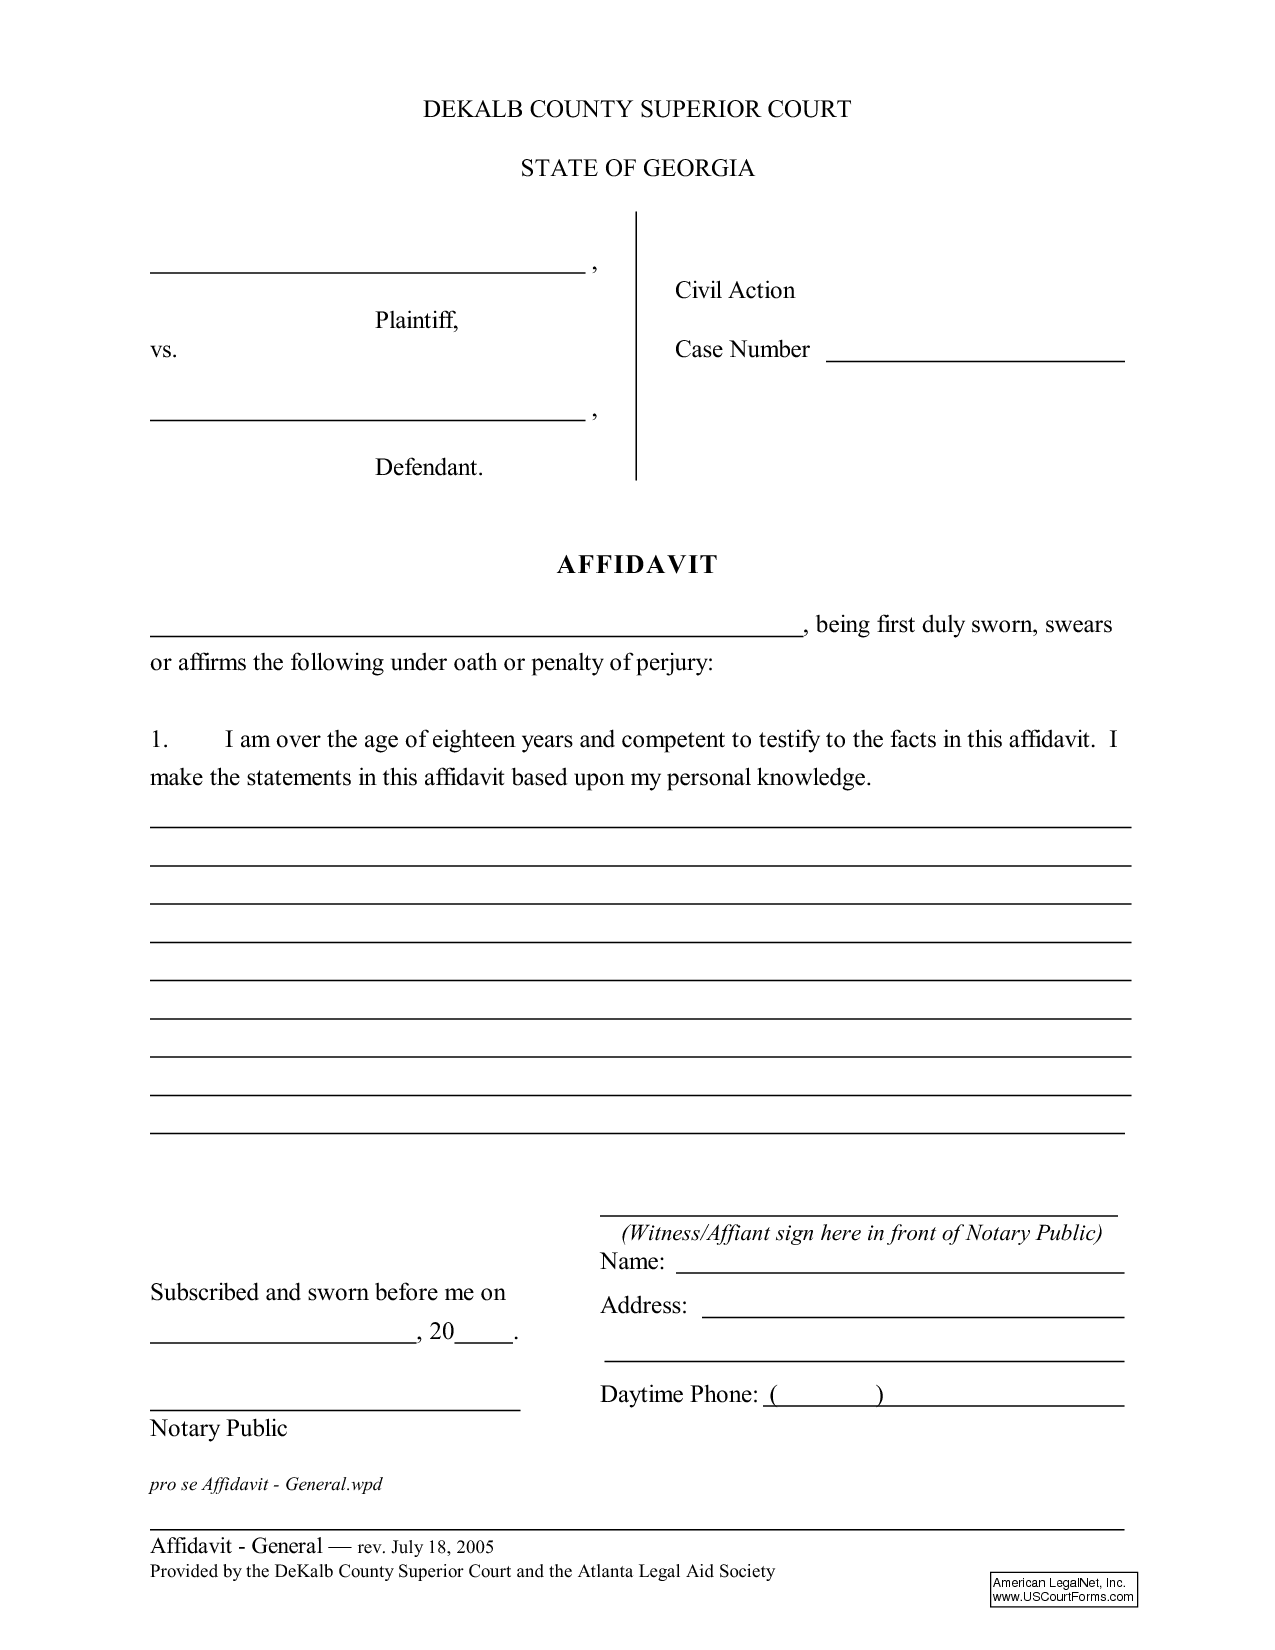 affidavit-printable-form-printable-forms-free-online